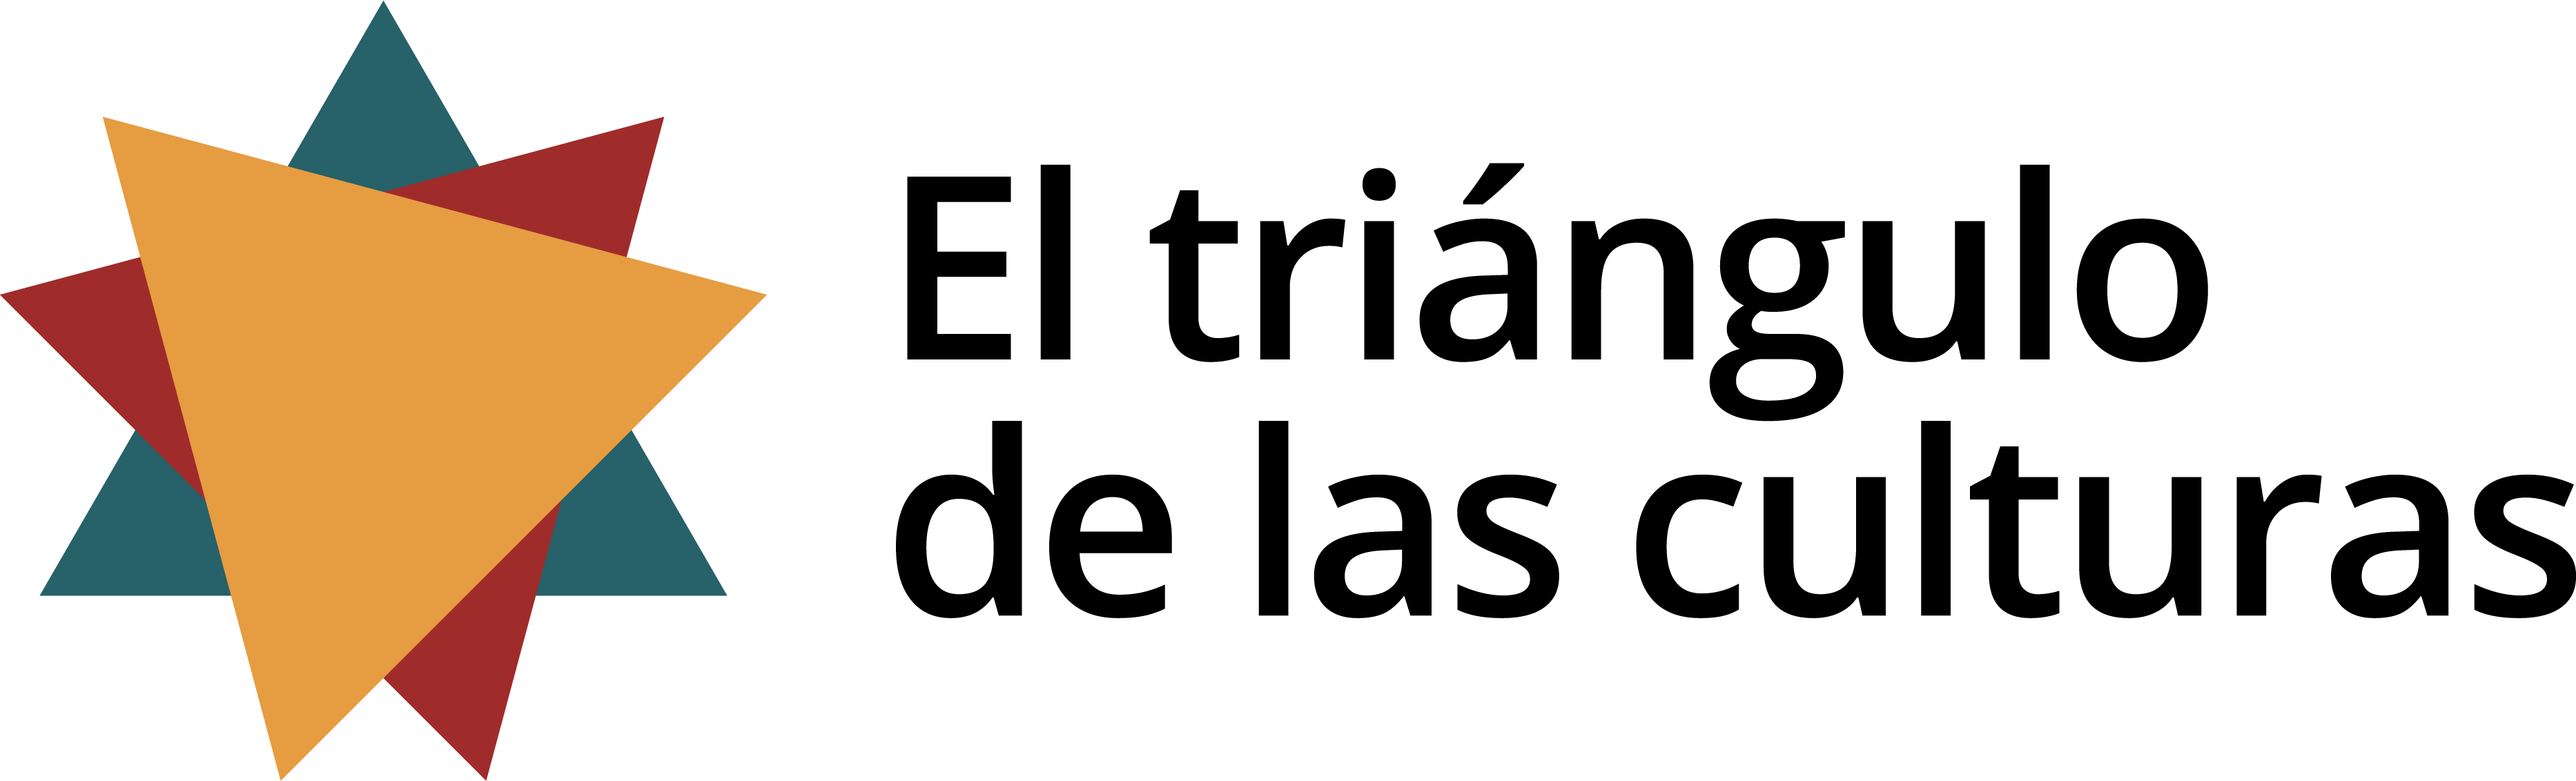 Tiangulo culturas logo